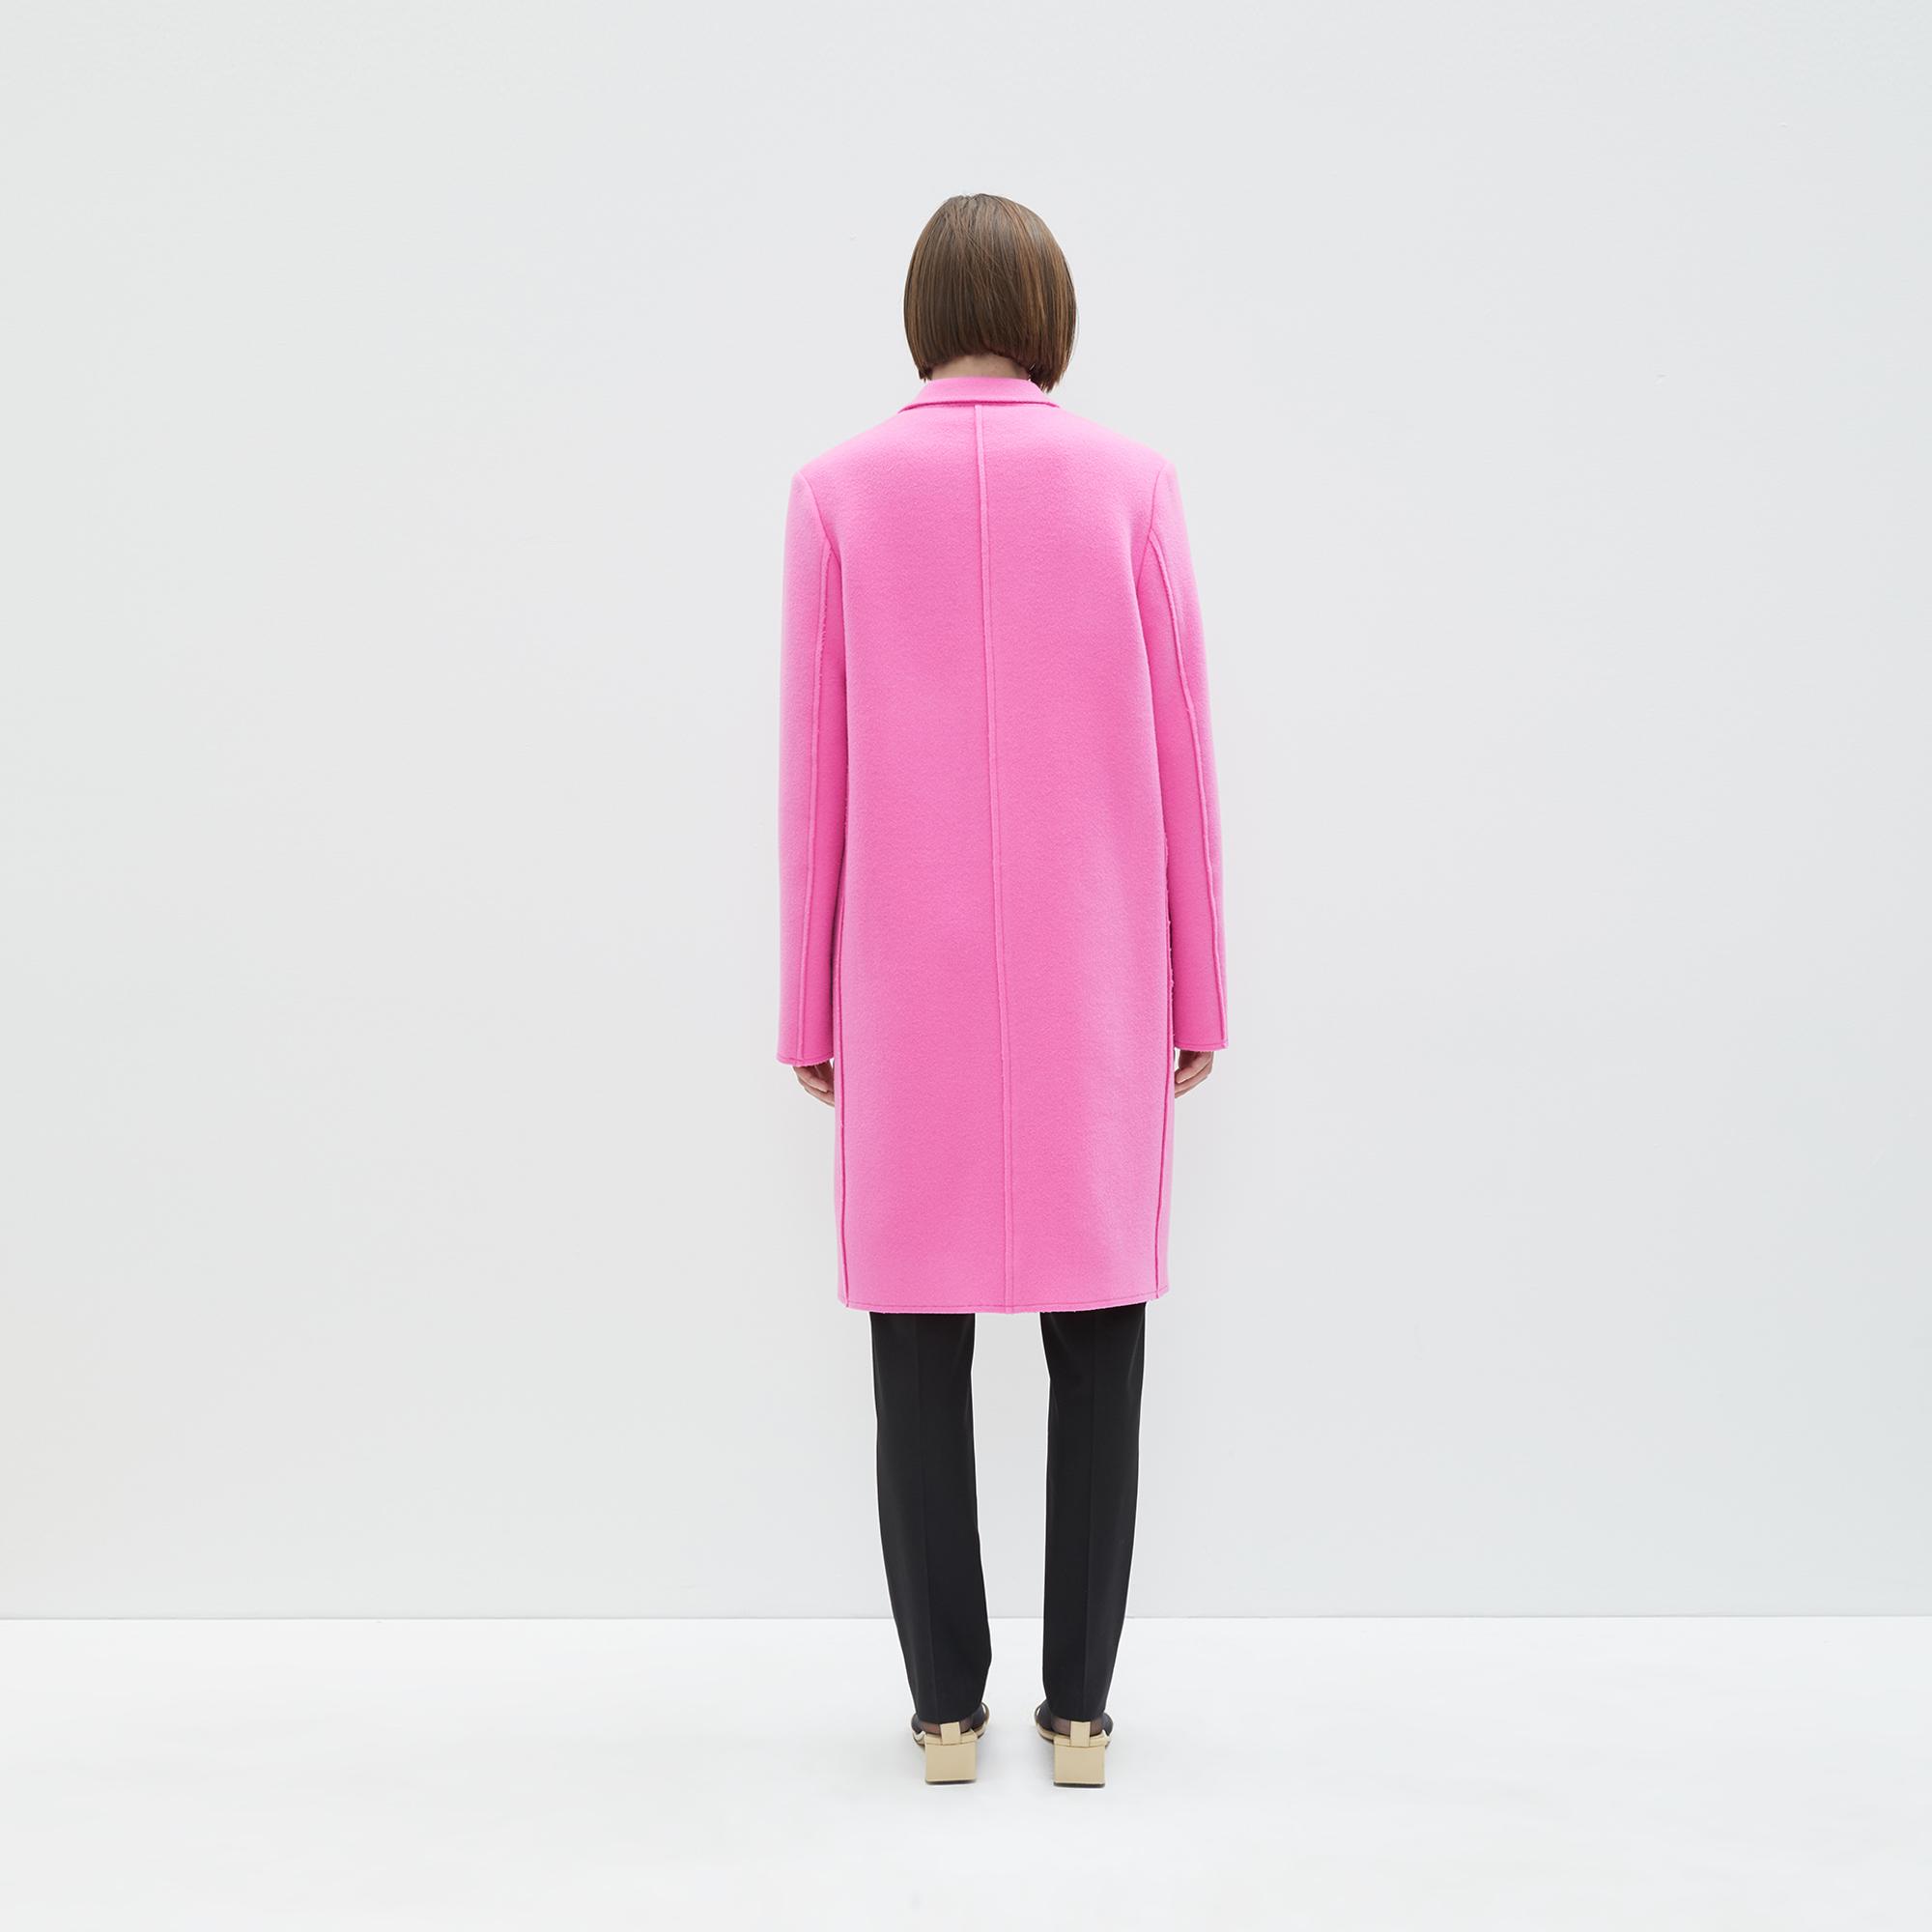 Helmut Lang Gum(Bright Pink) Double Face Wool Blazer Coat | WWW ...